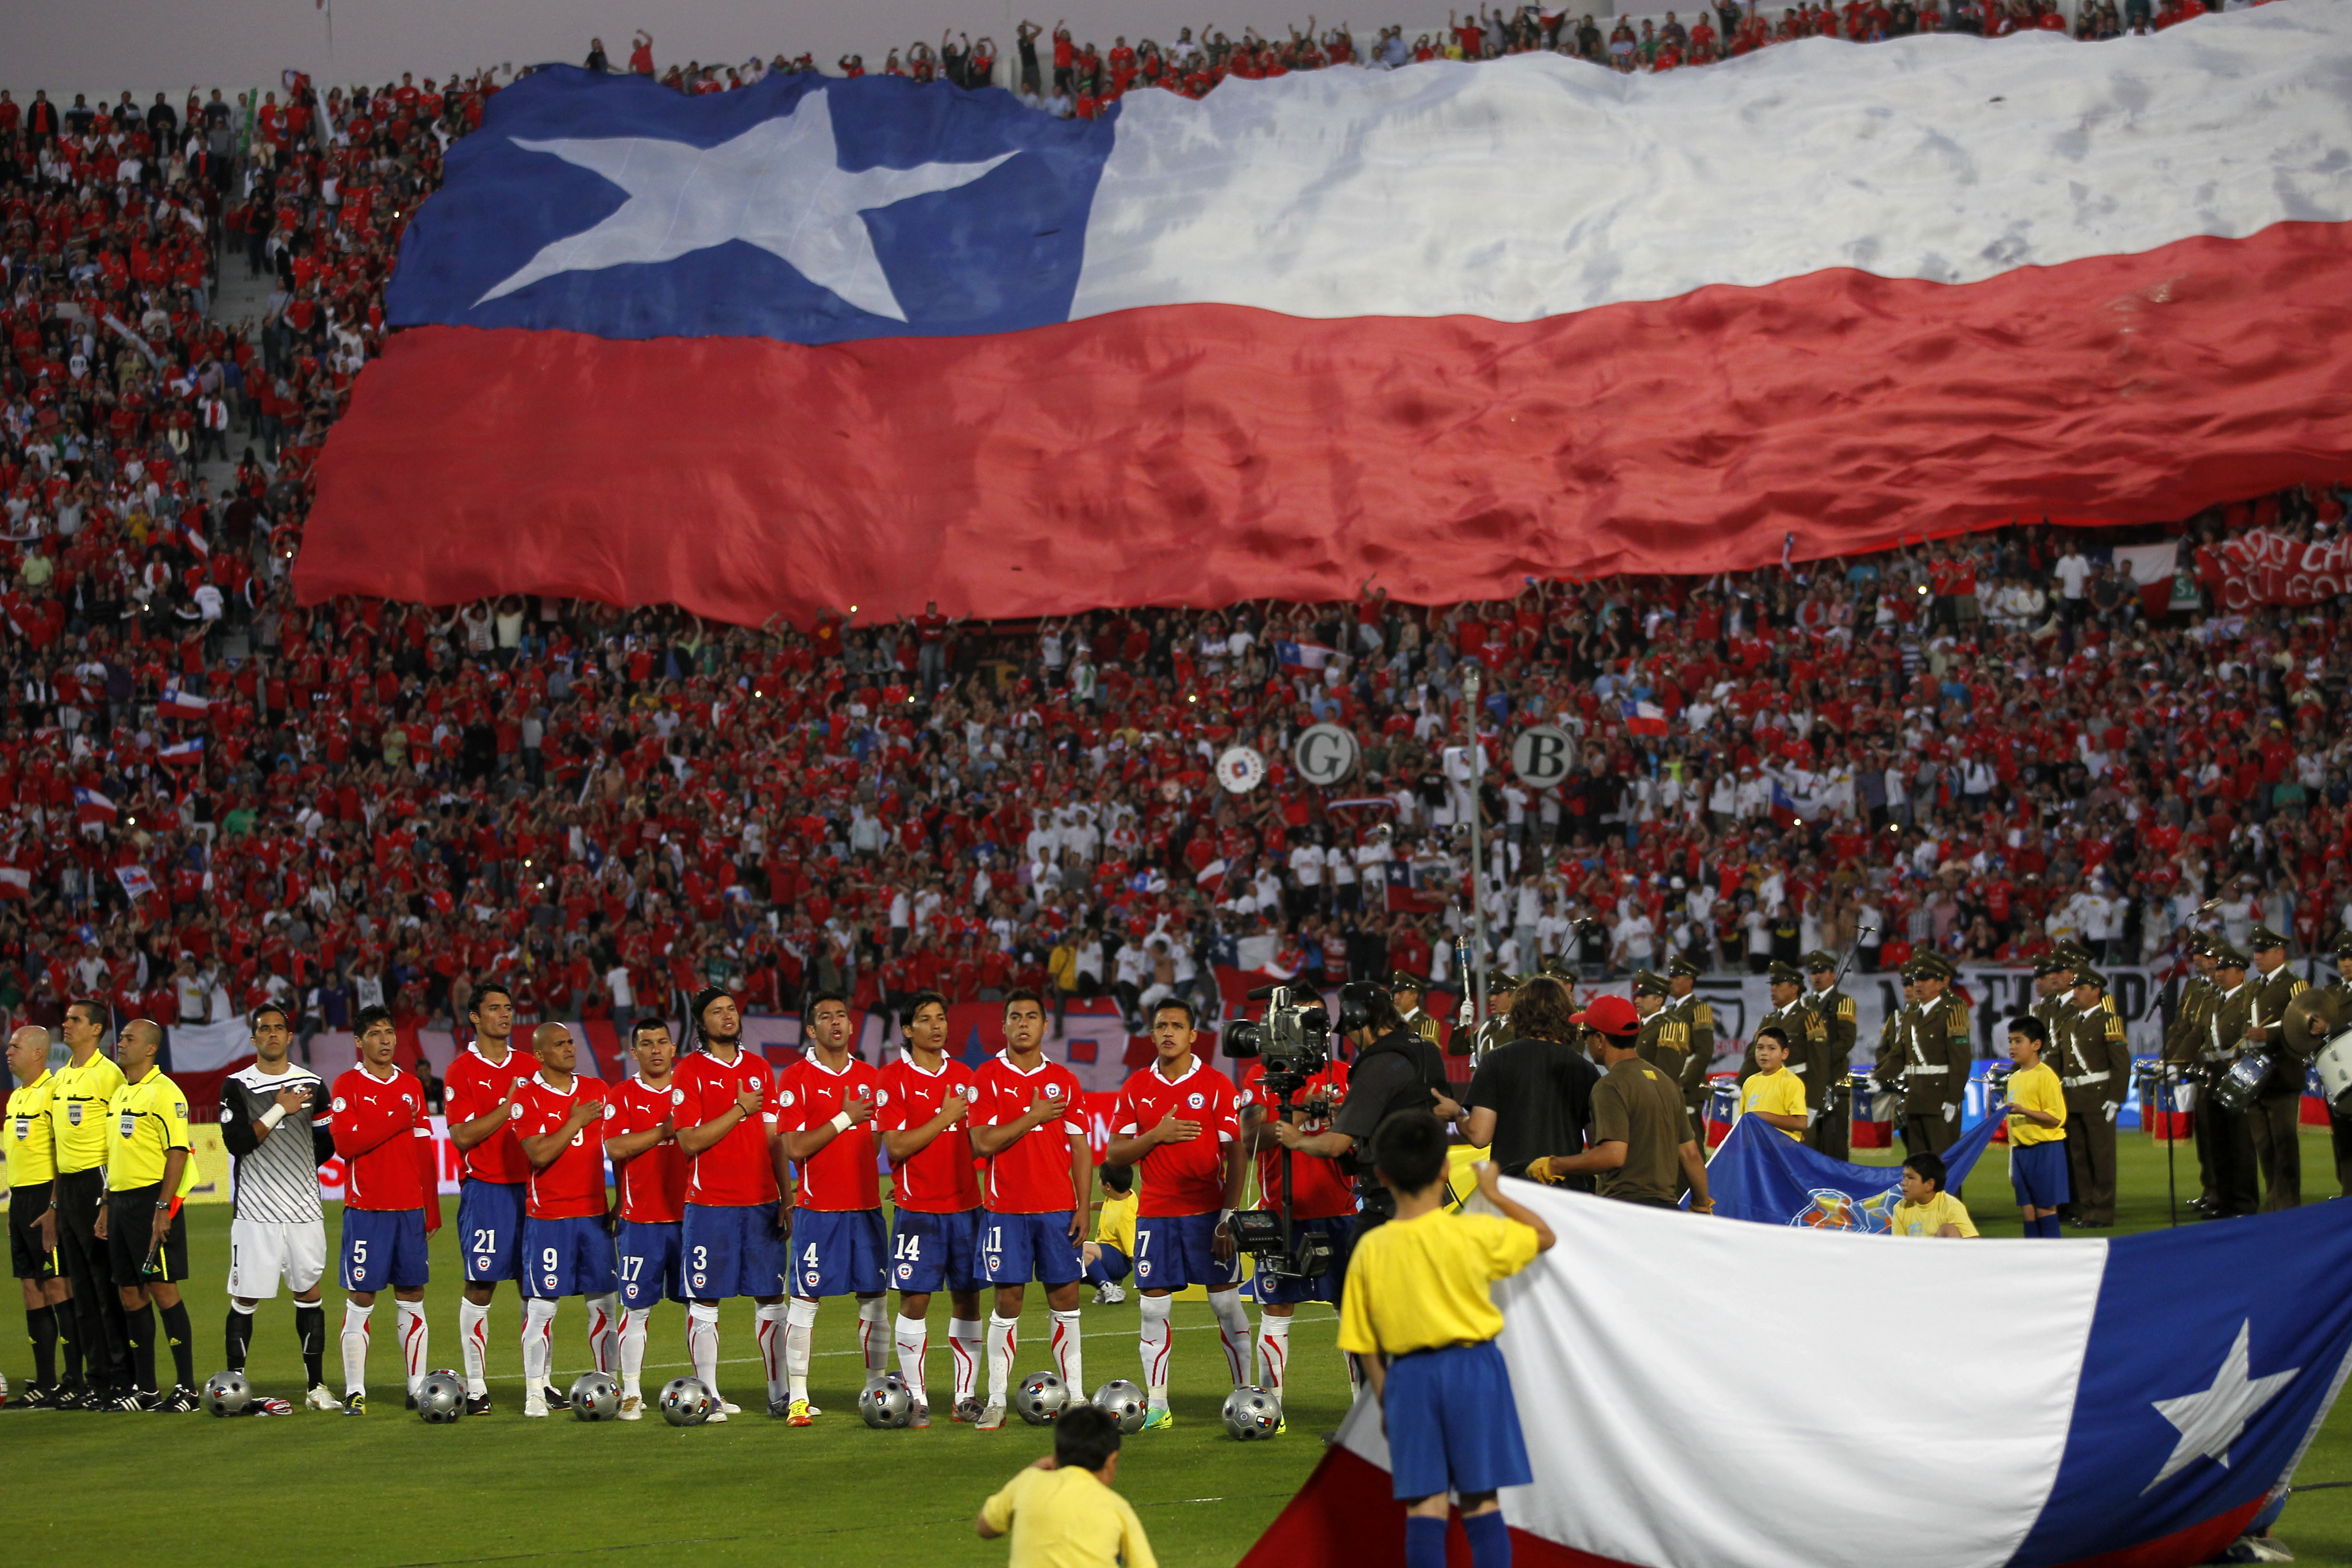 FIFA castiga a Chile por cánticos discriminatorios